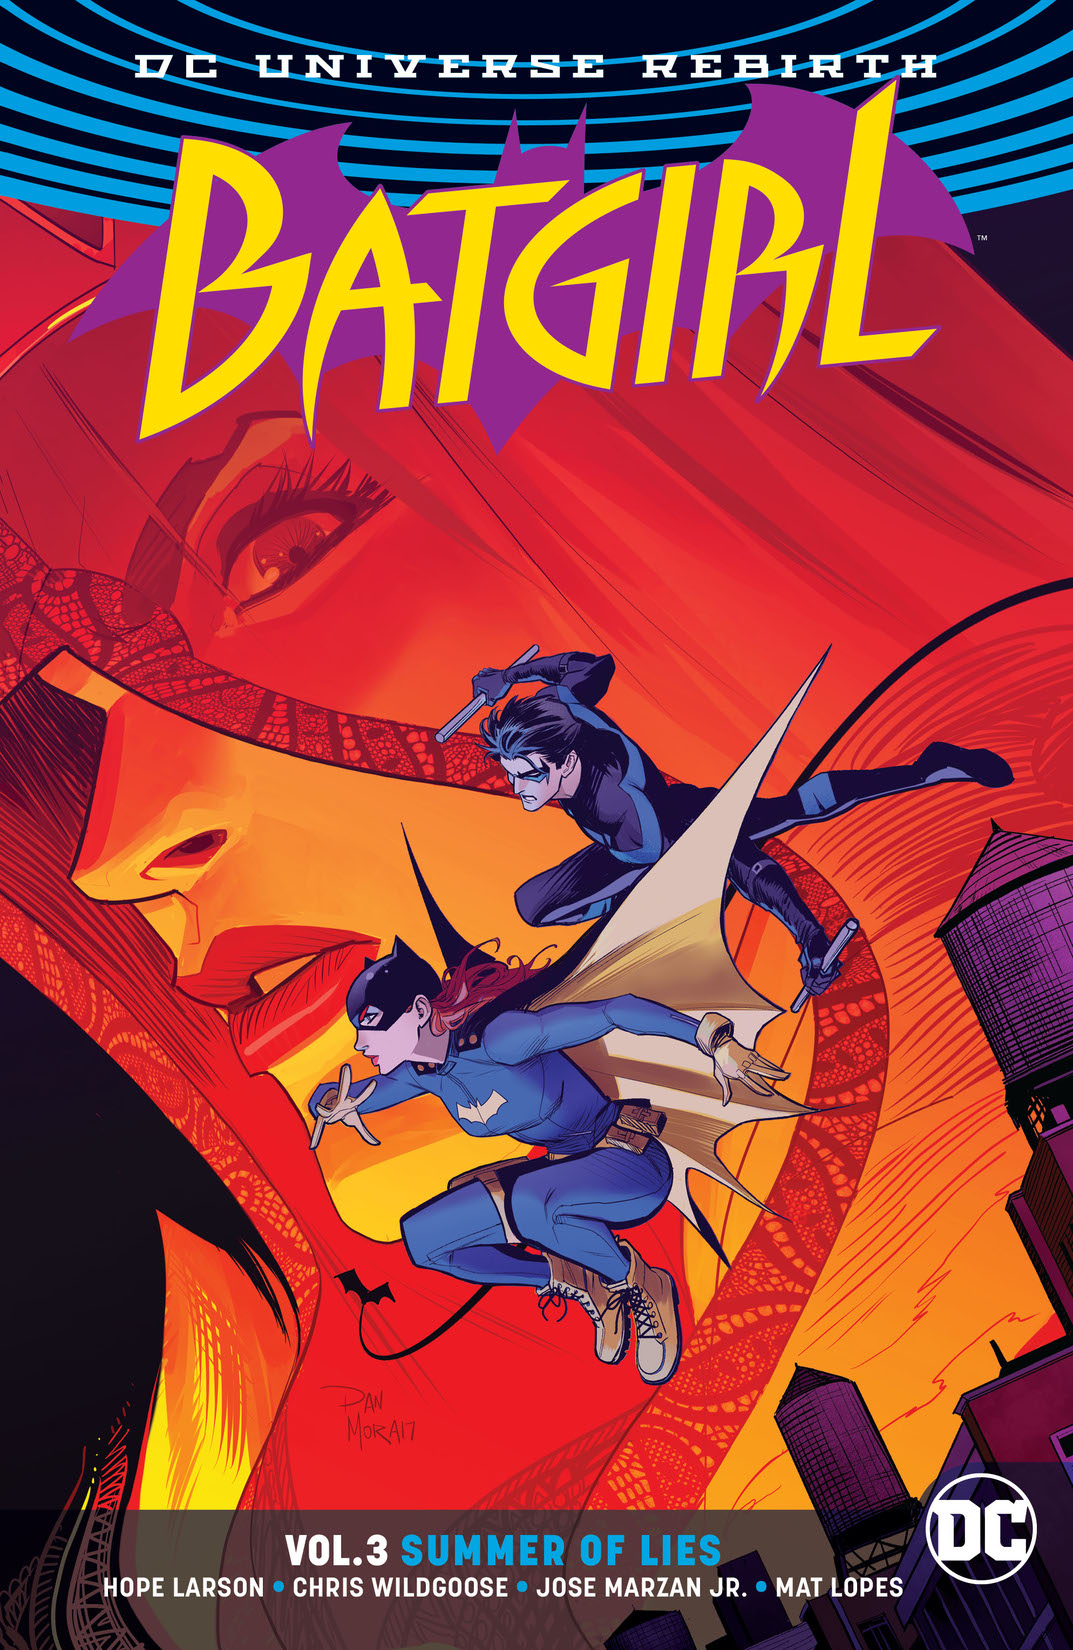 Batgirl Vol. 3: Summer of Lies  preview images